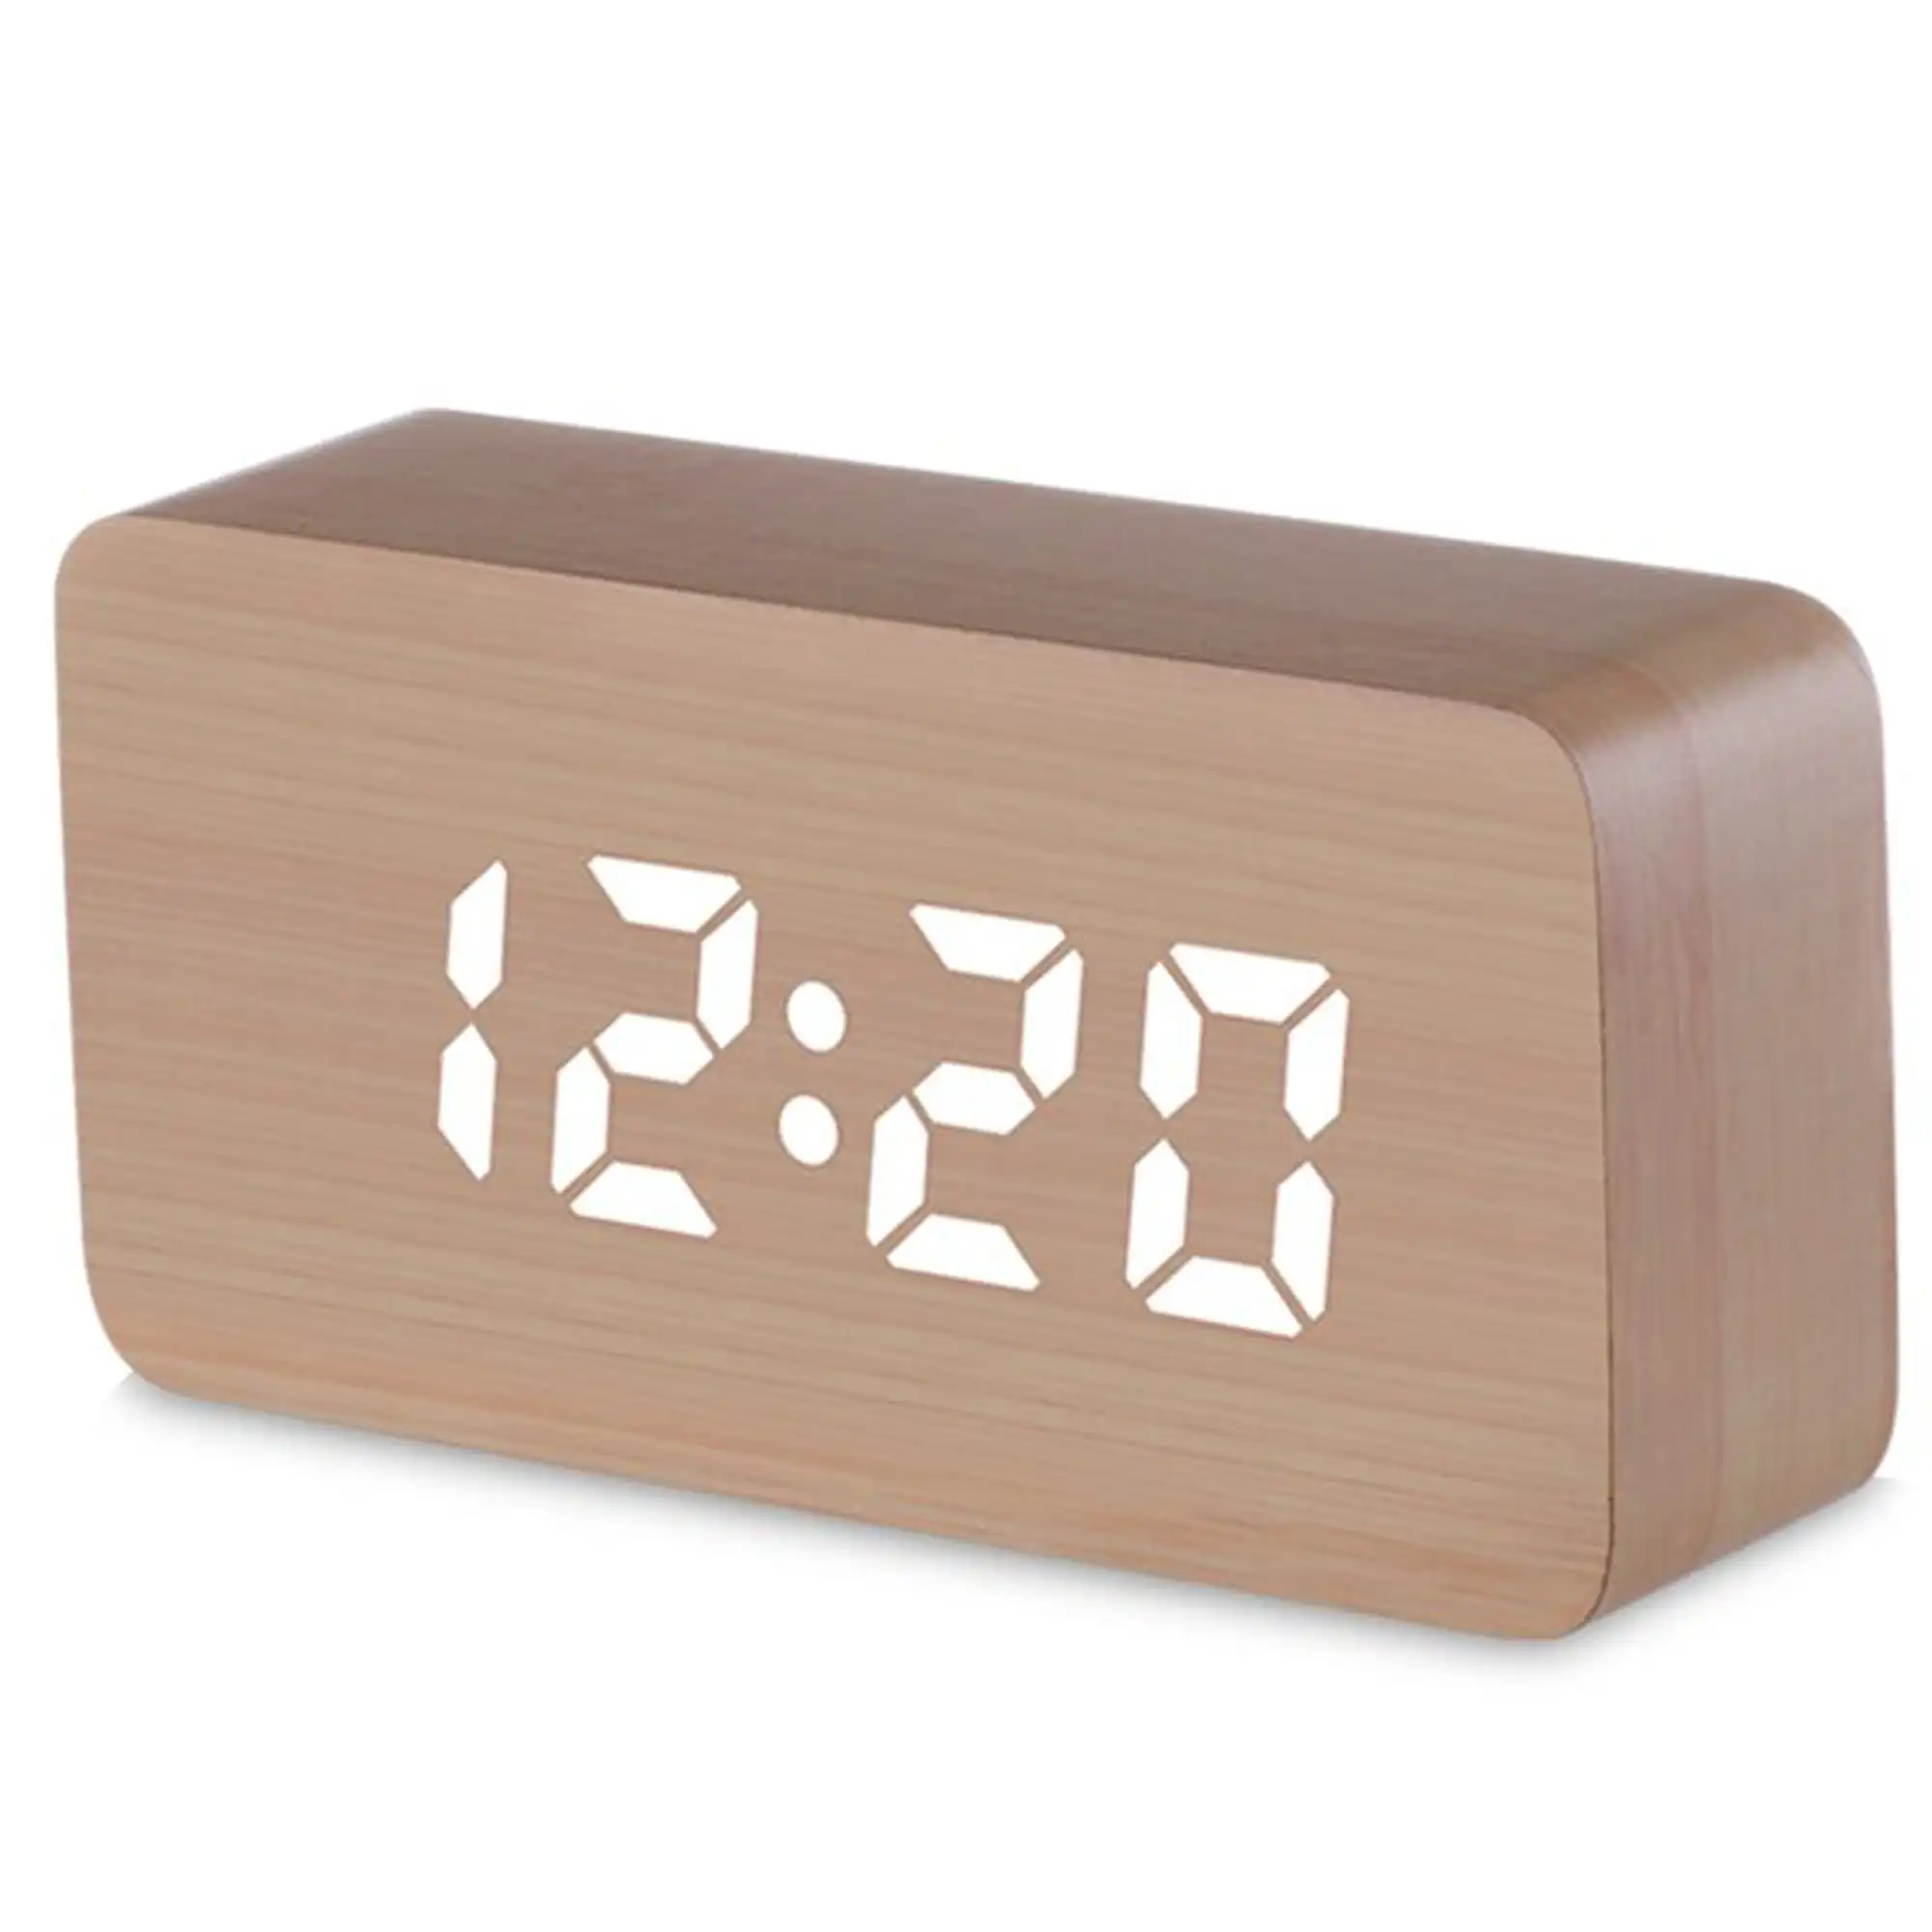 Todo LED Digital Alarm Clock 3 Alarm 115 Colour Display USB Power Woodgrain - Beige